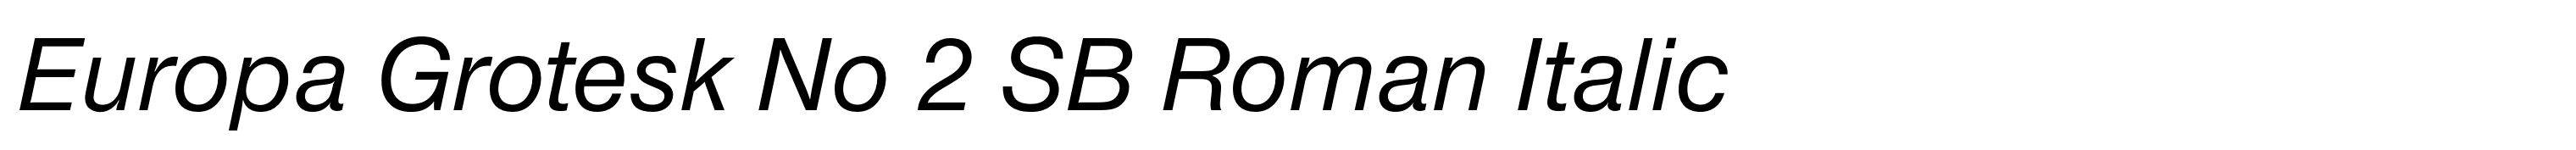 Europa Grotesk No 2 SB Roman Italic